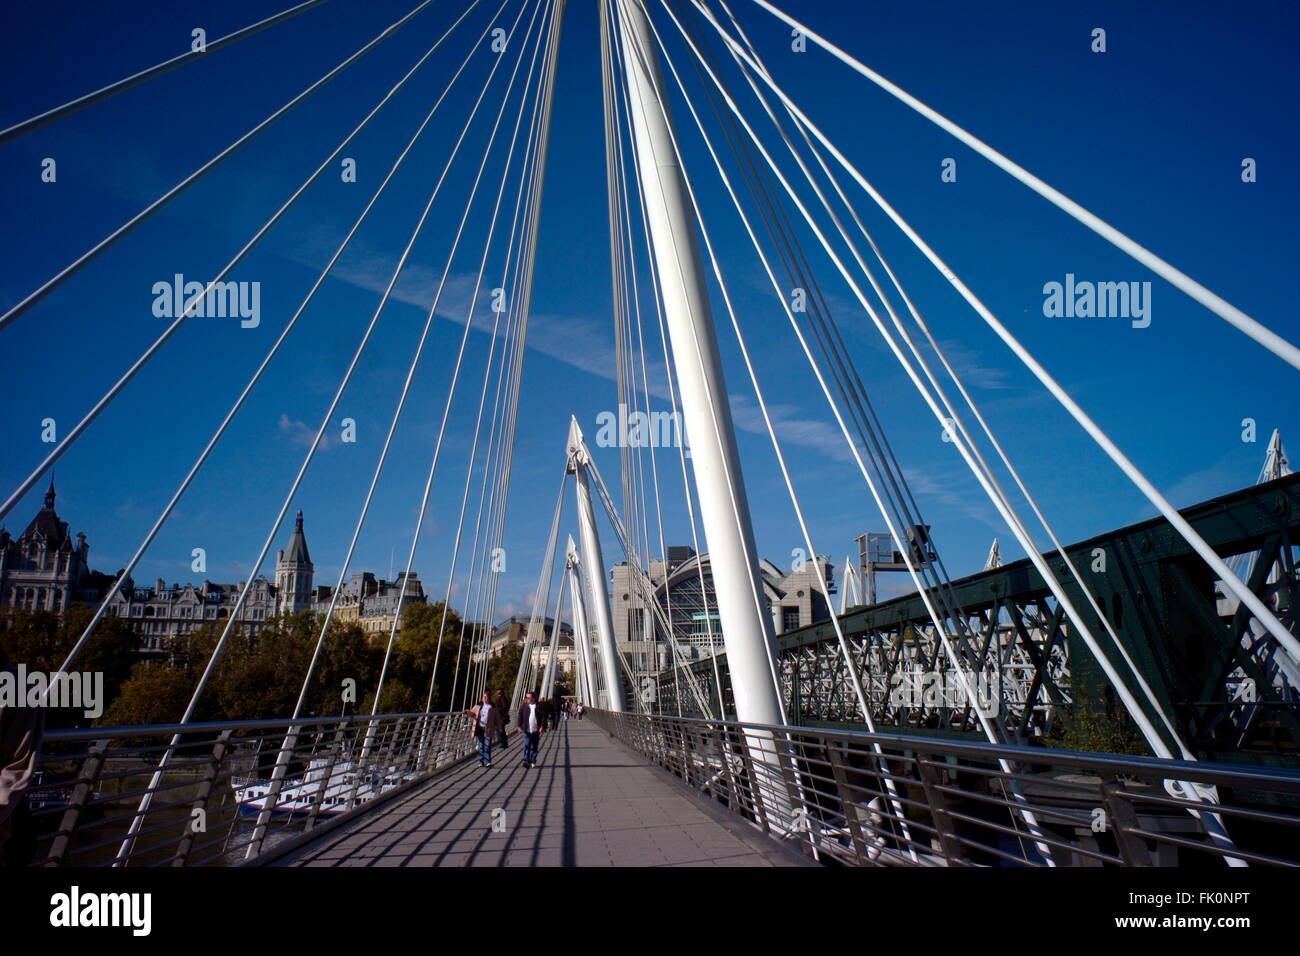 AJAXNETPHOTO. Londra, Inghilterra. - Il giubileo dorato della regina ponte sul Tamigi accanto a Hungerford RAIL BRIDGE (a destra). Foto:JONATHAN EASTLAND/AJAX REF:M873010 487 Foto Stock